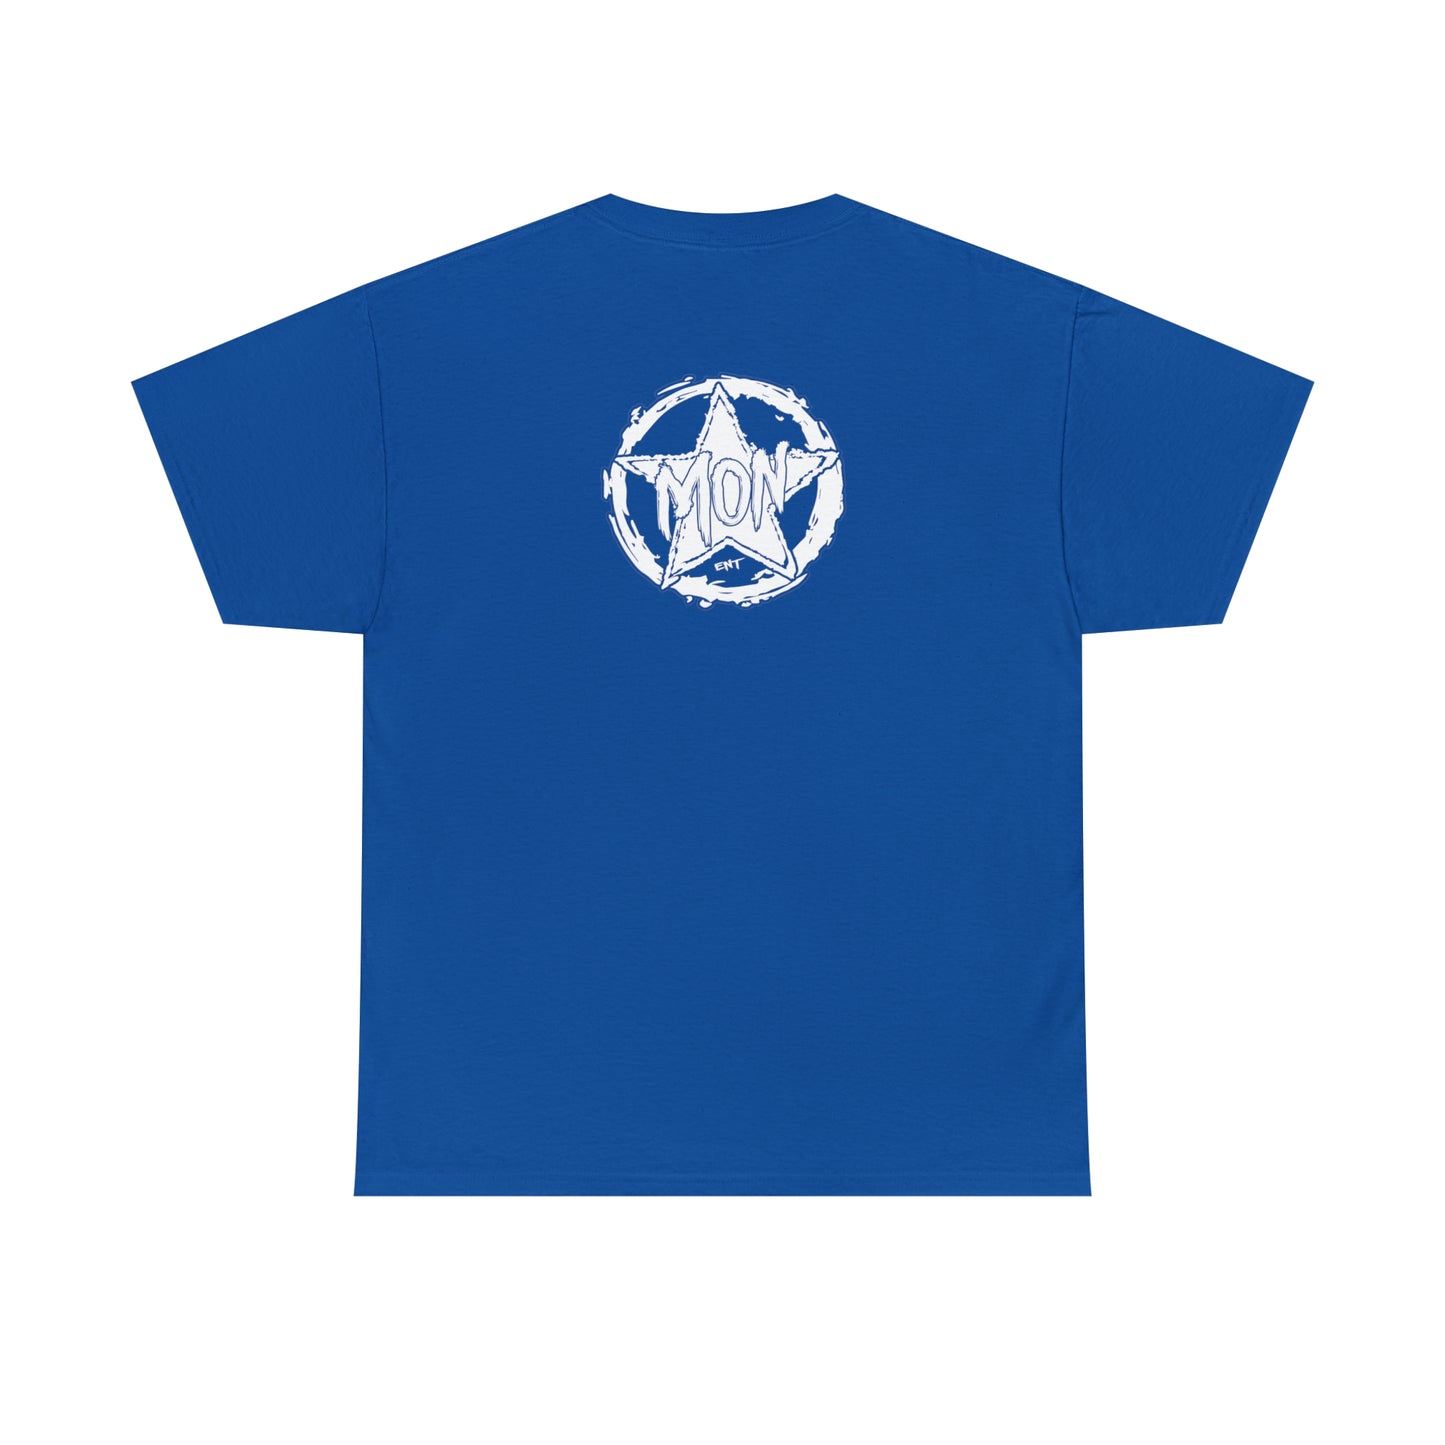 Project Born Logo T-Shirt (Blue)